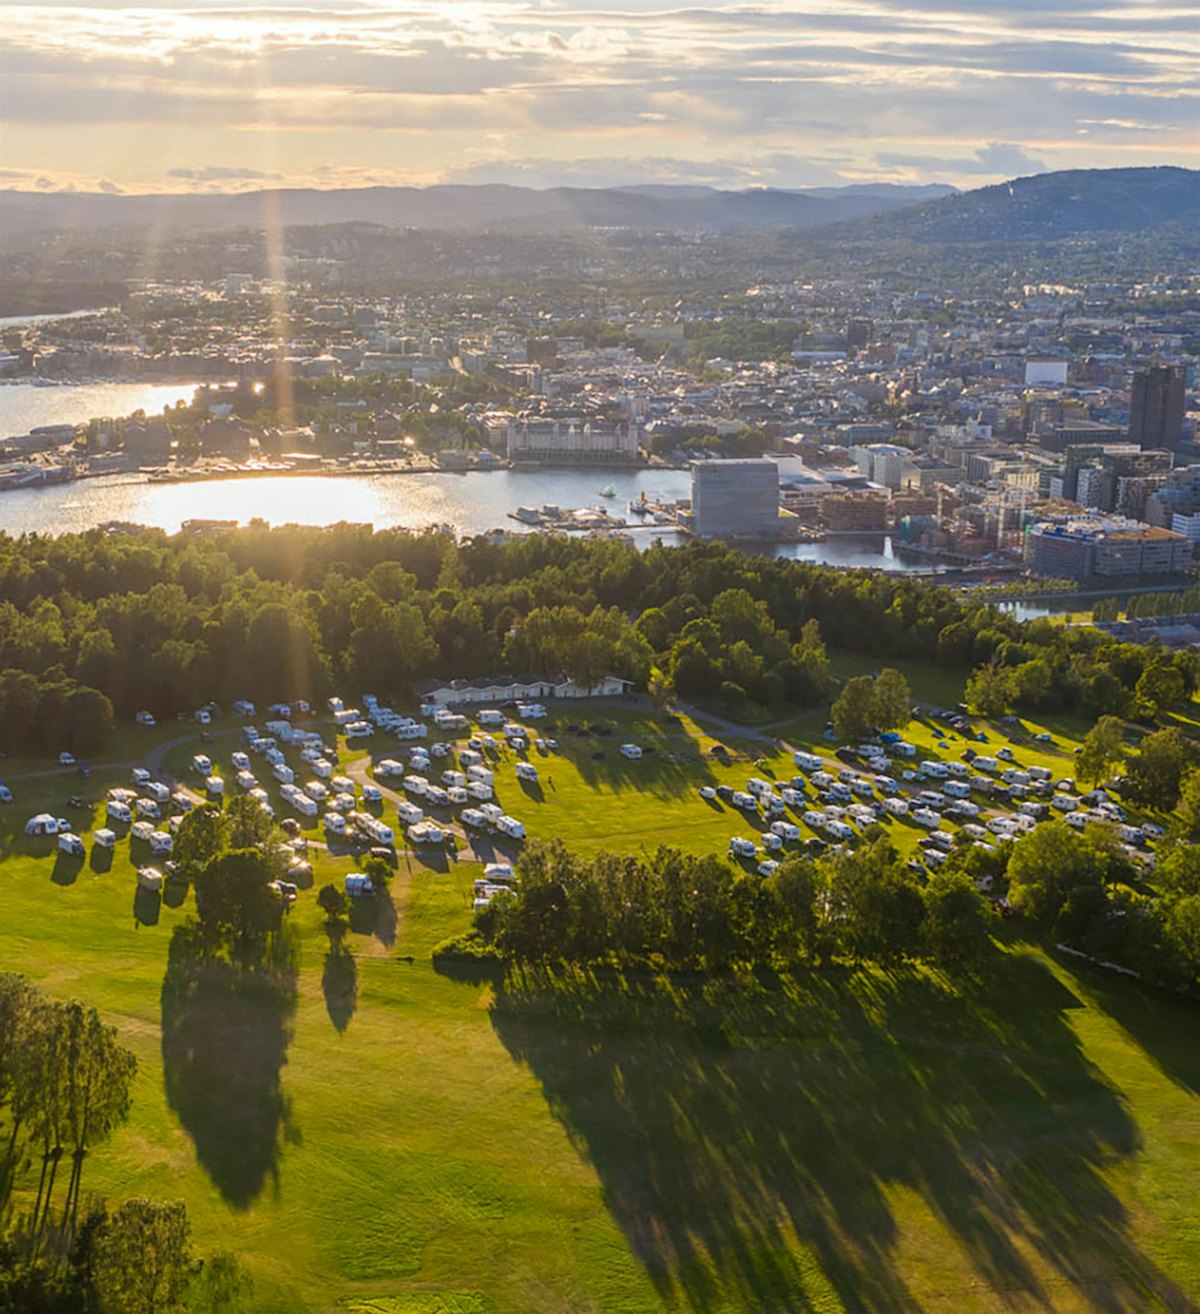 Topcamp Ekeberg, Oslofjord and Oslo city center in backlight. Beautiful drone photo